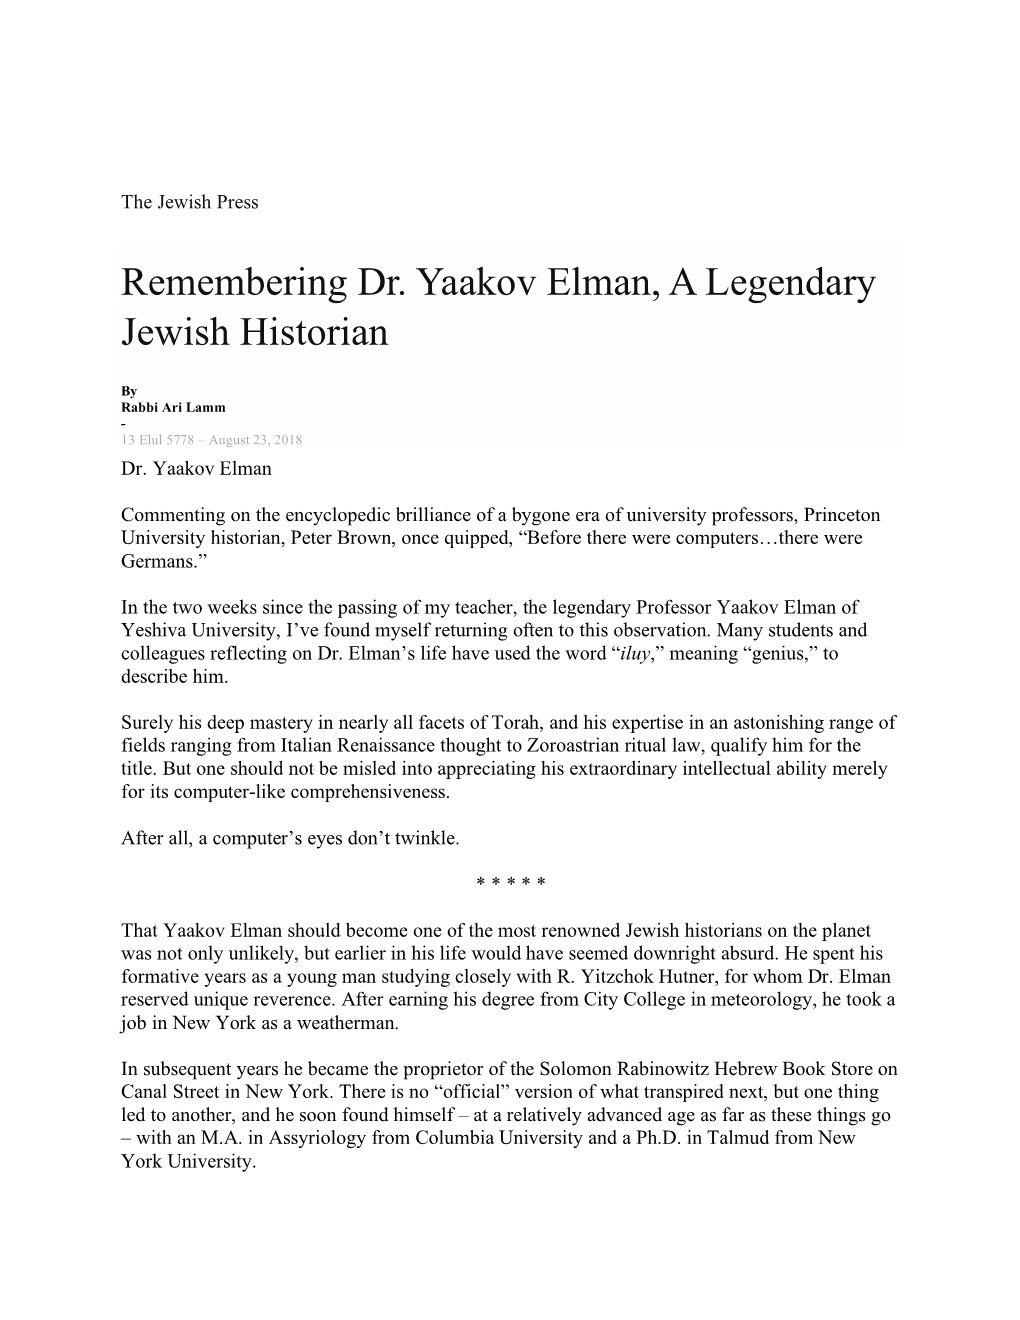 Remembering Dr. Yaakov Elman, a Legendary Jewish Historian